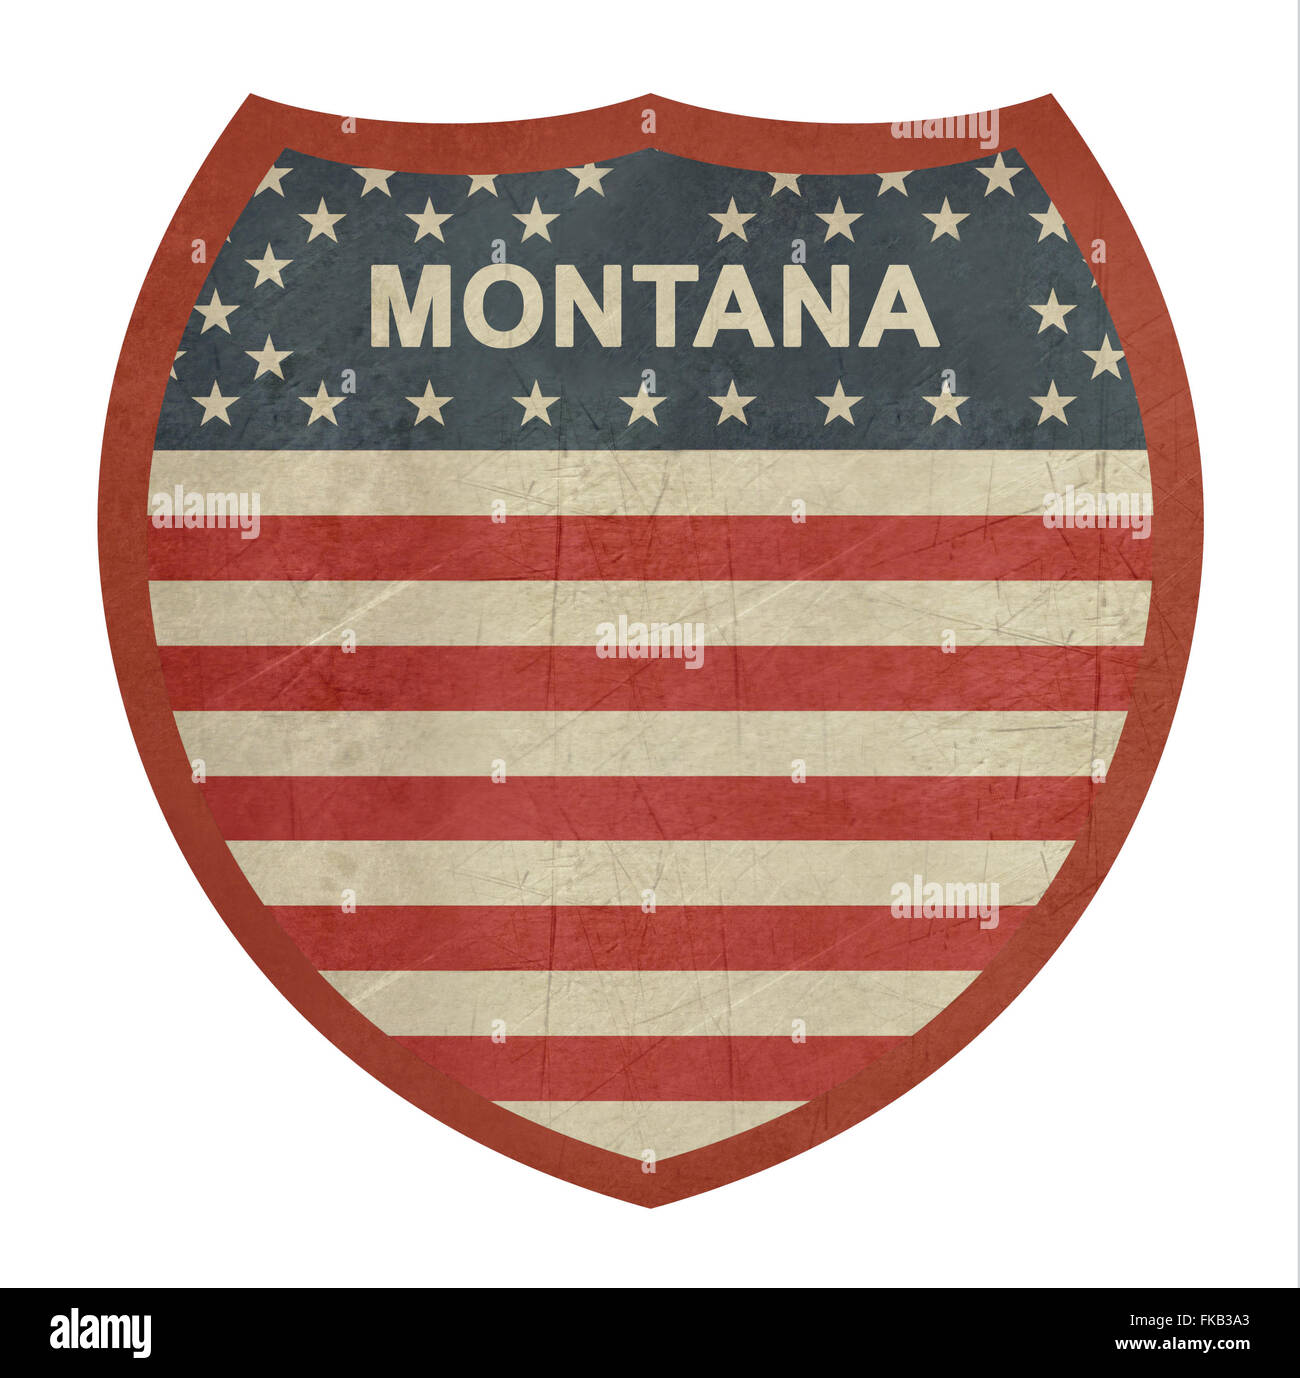 Grunge Américain du Montana Interstate highway sign isolé sur un fond blanc. Banque D'Images